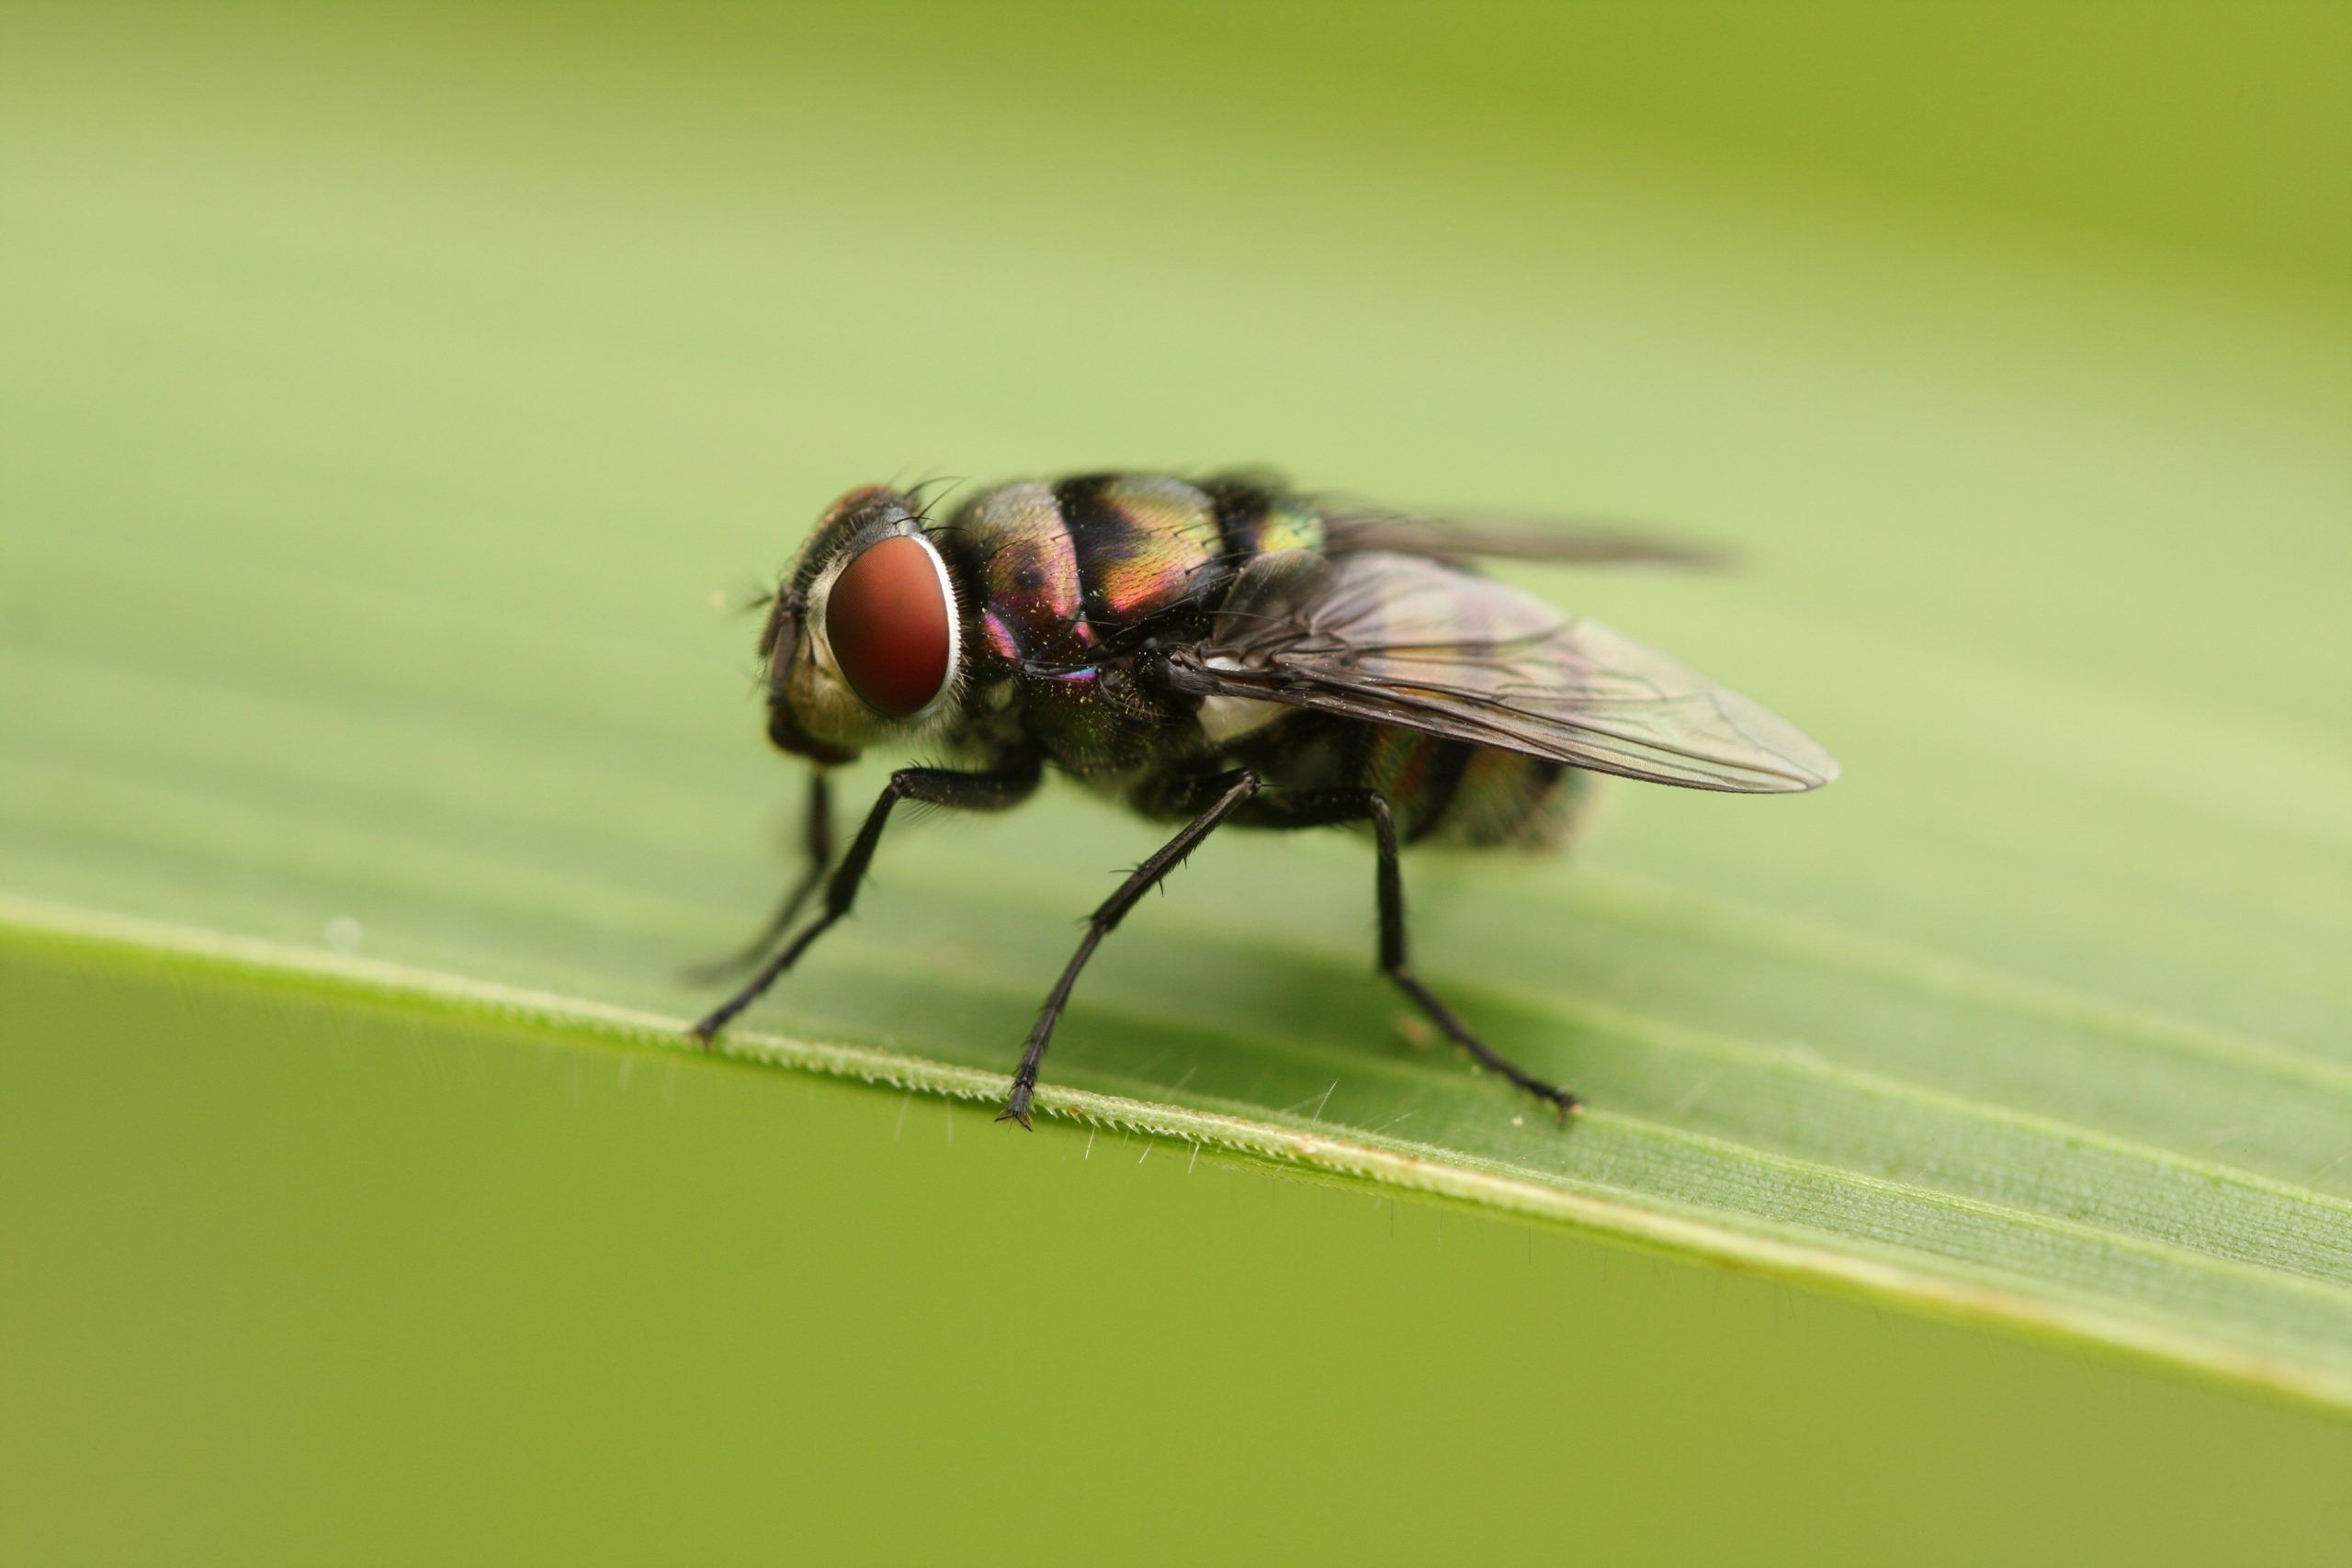 Tsetse Fly Volatile Pheromones Could Treat Diseases They Spread